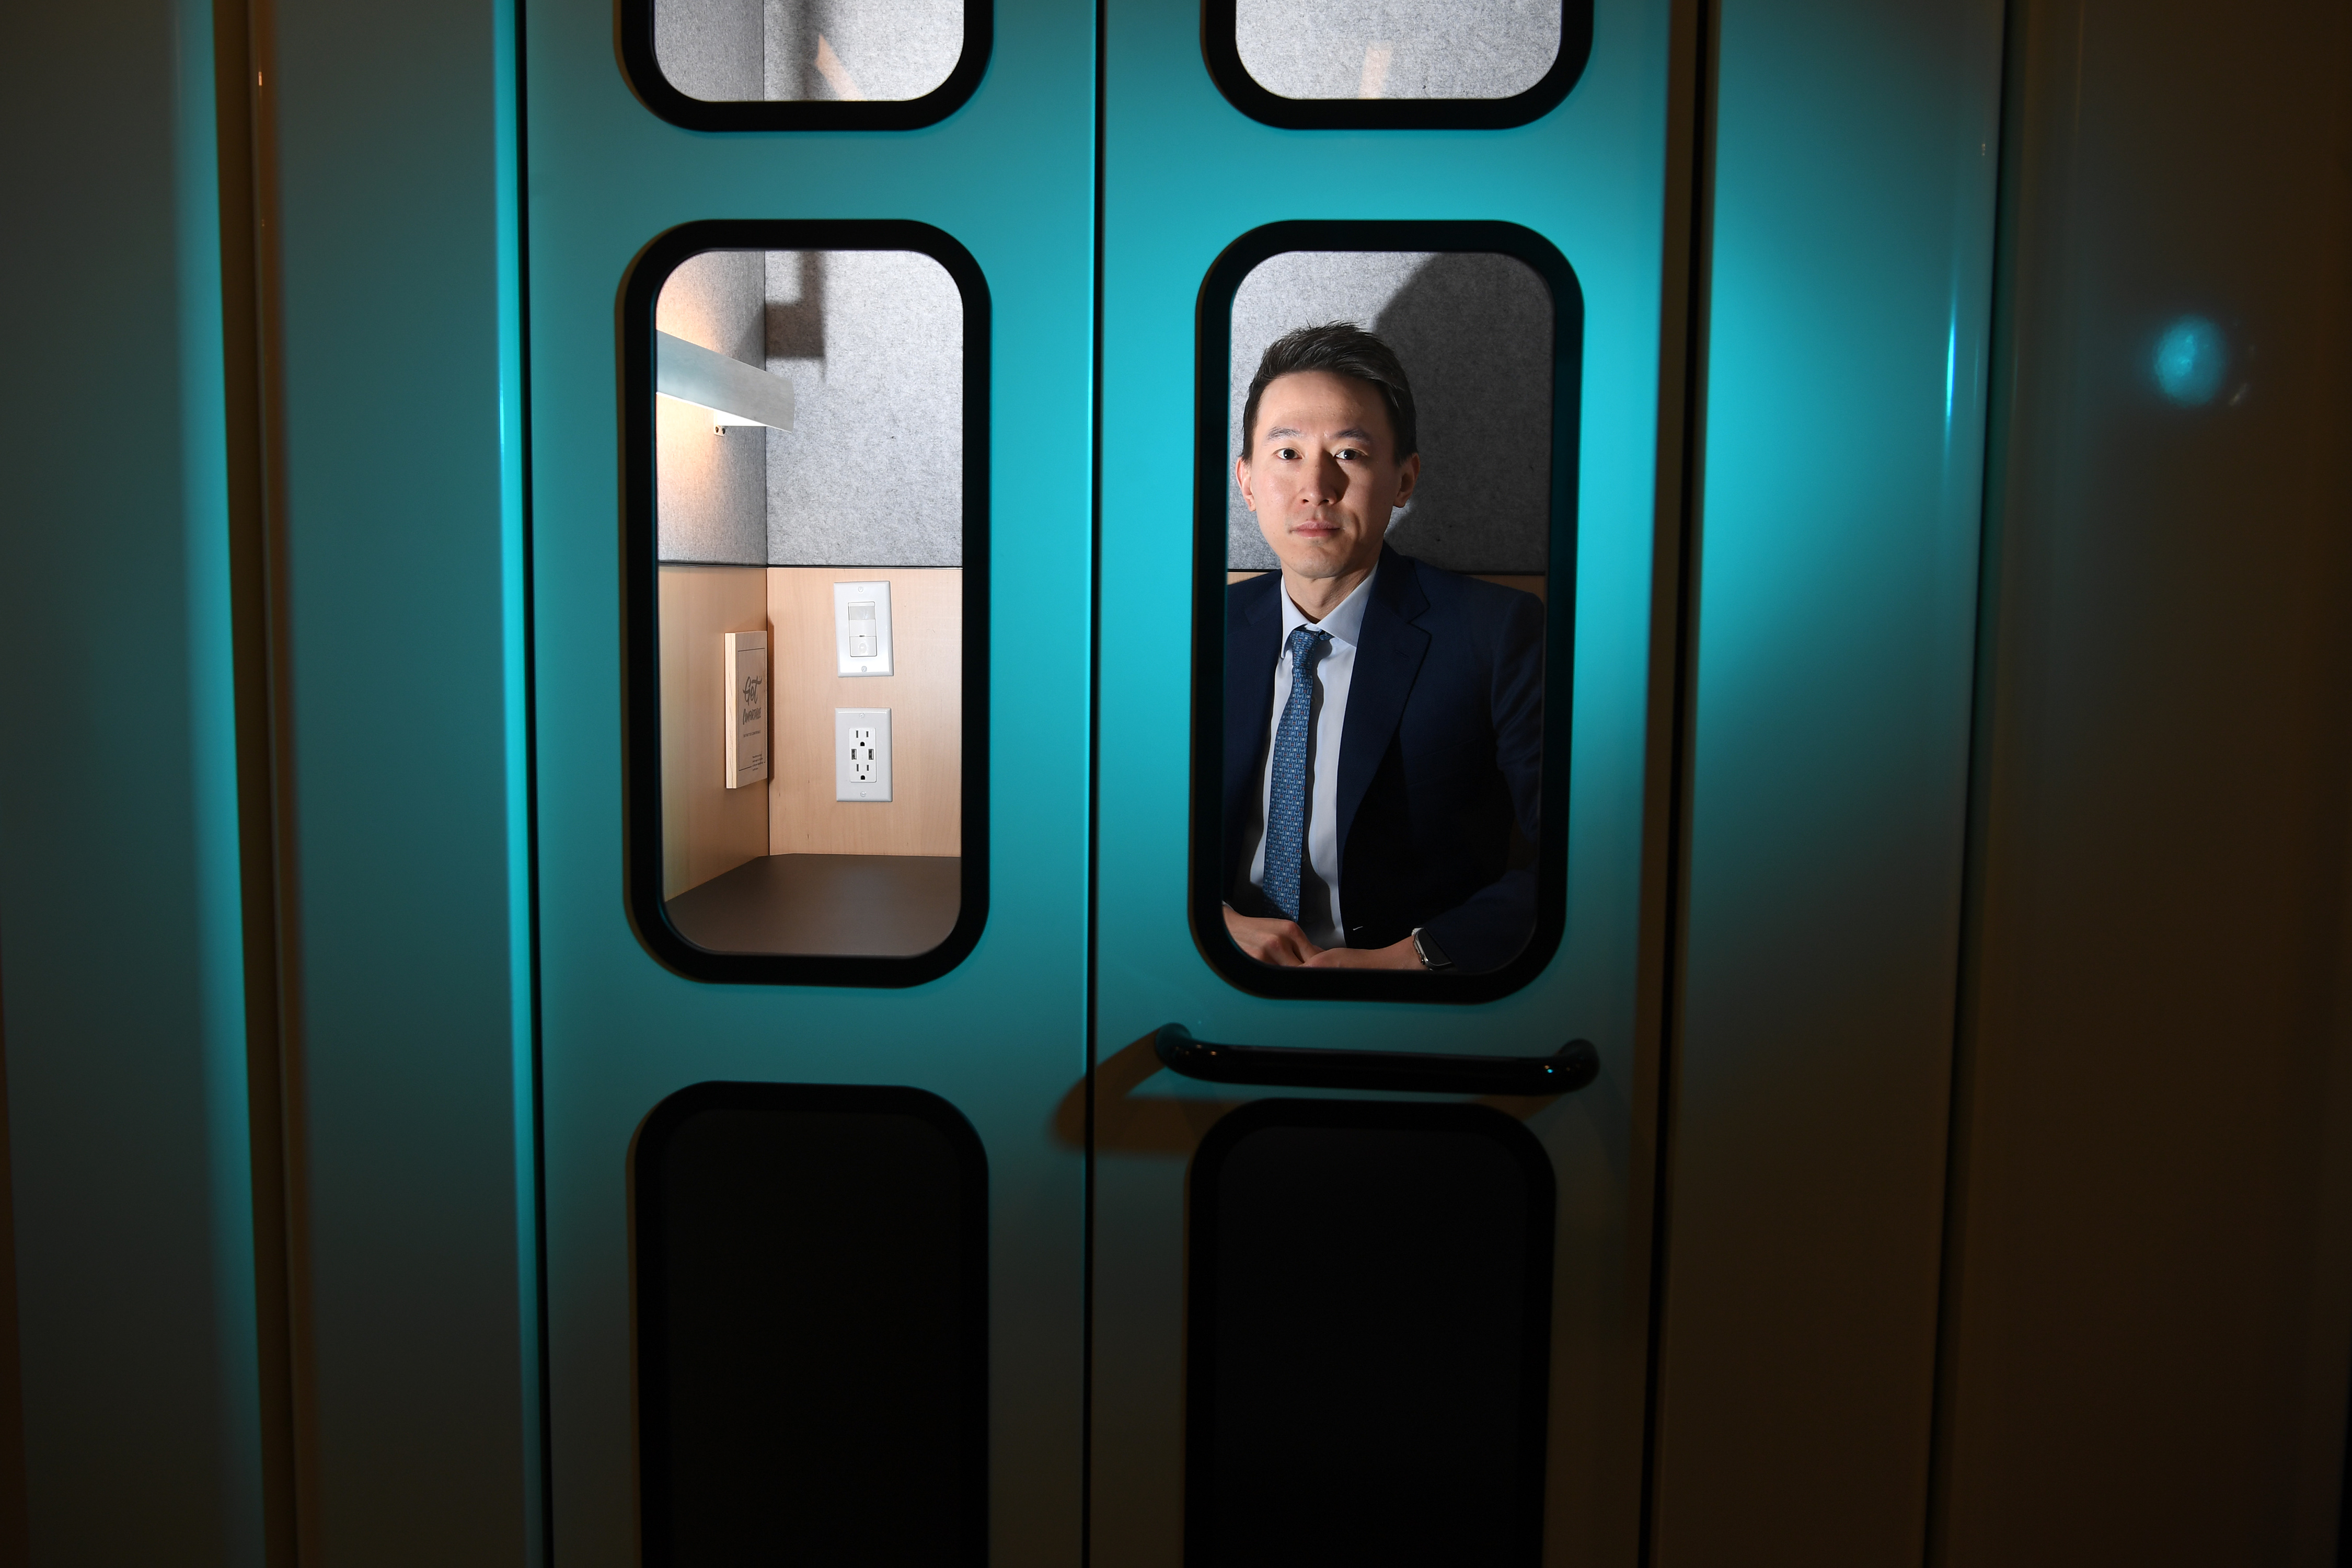 TikTok CEO Shou Zi Chew in a phone booth.